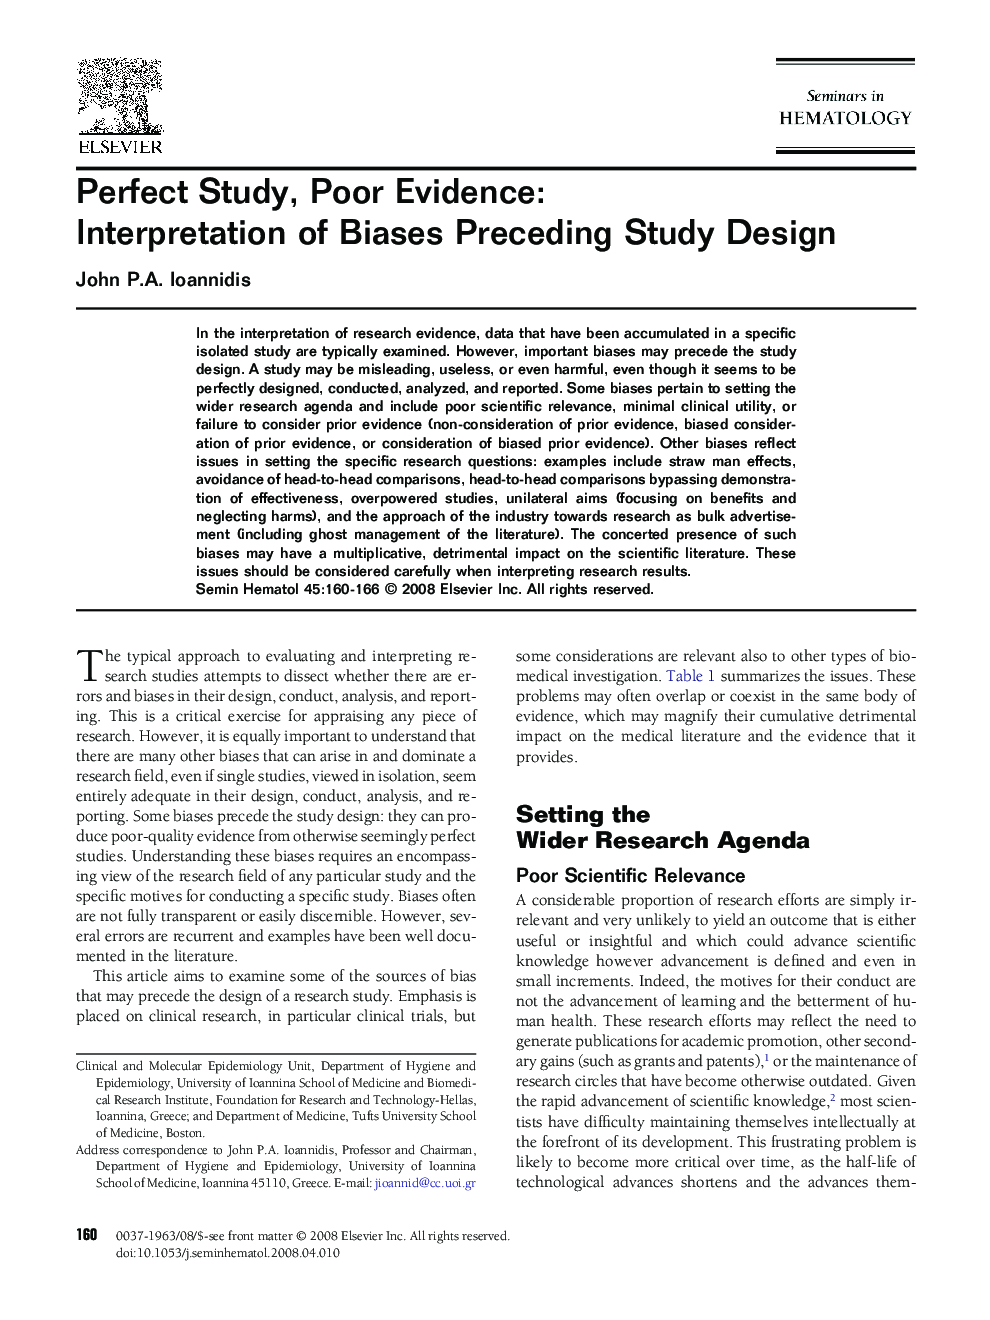 Perfect Study, Poor Evidence: Interpretation of Biases Preceding Study Design